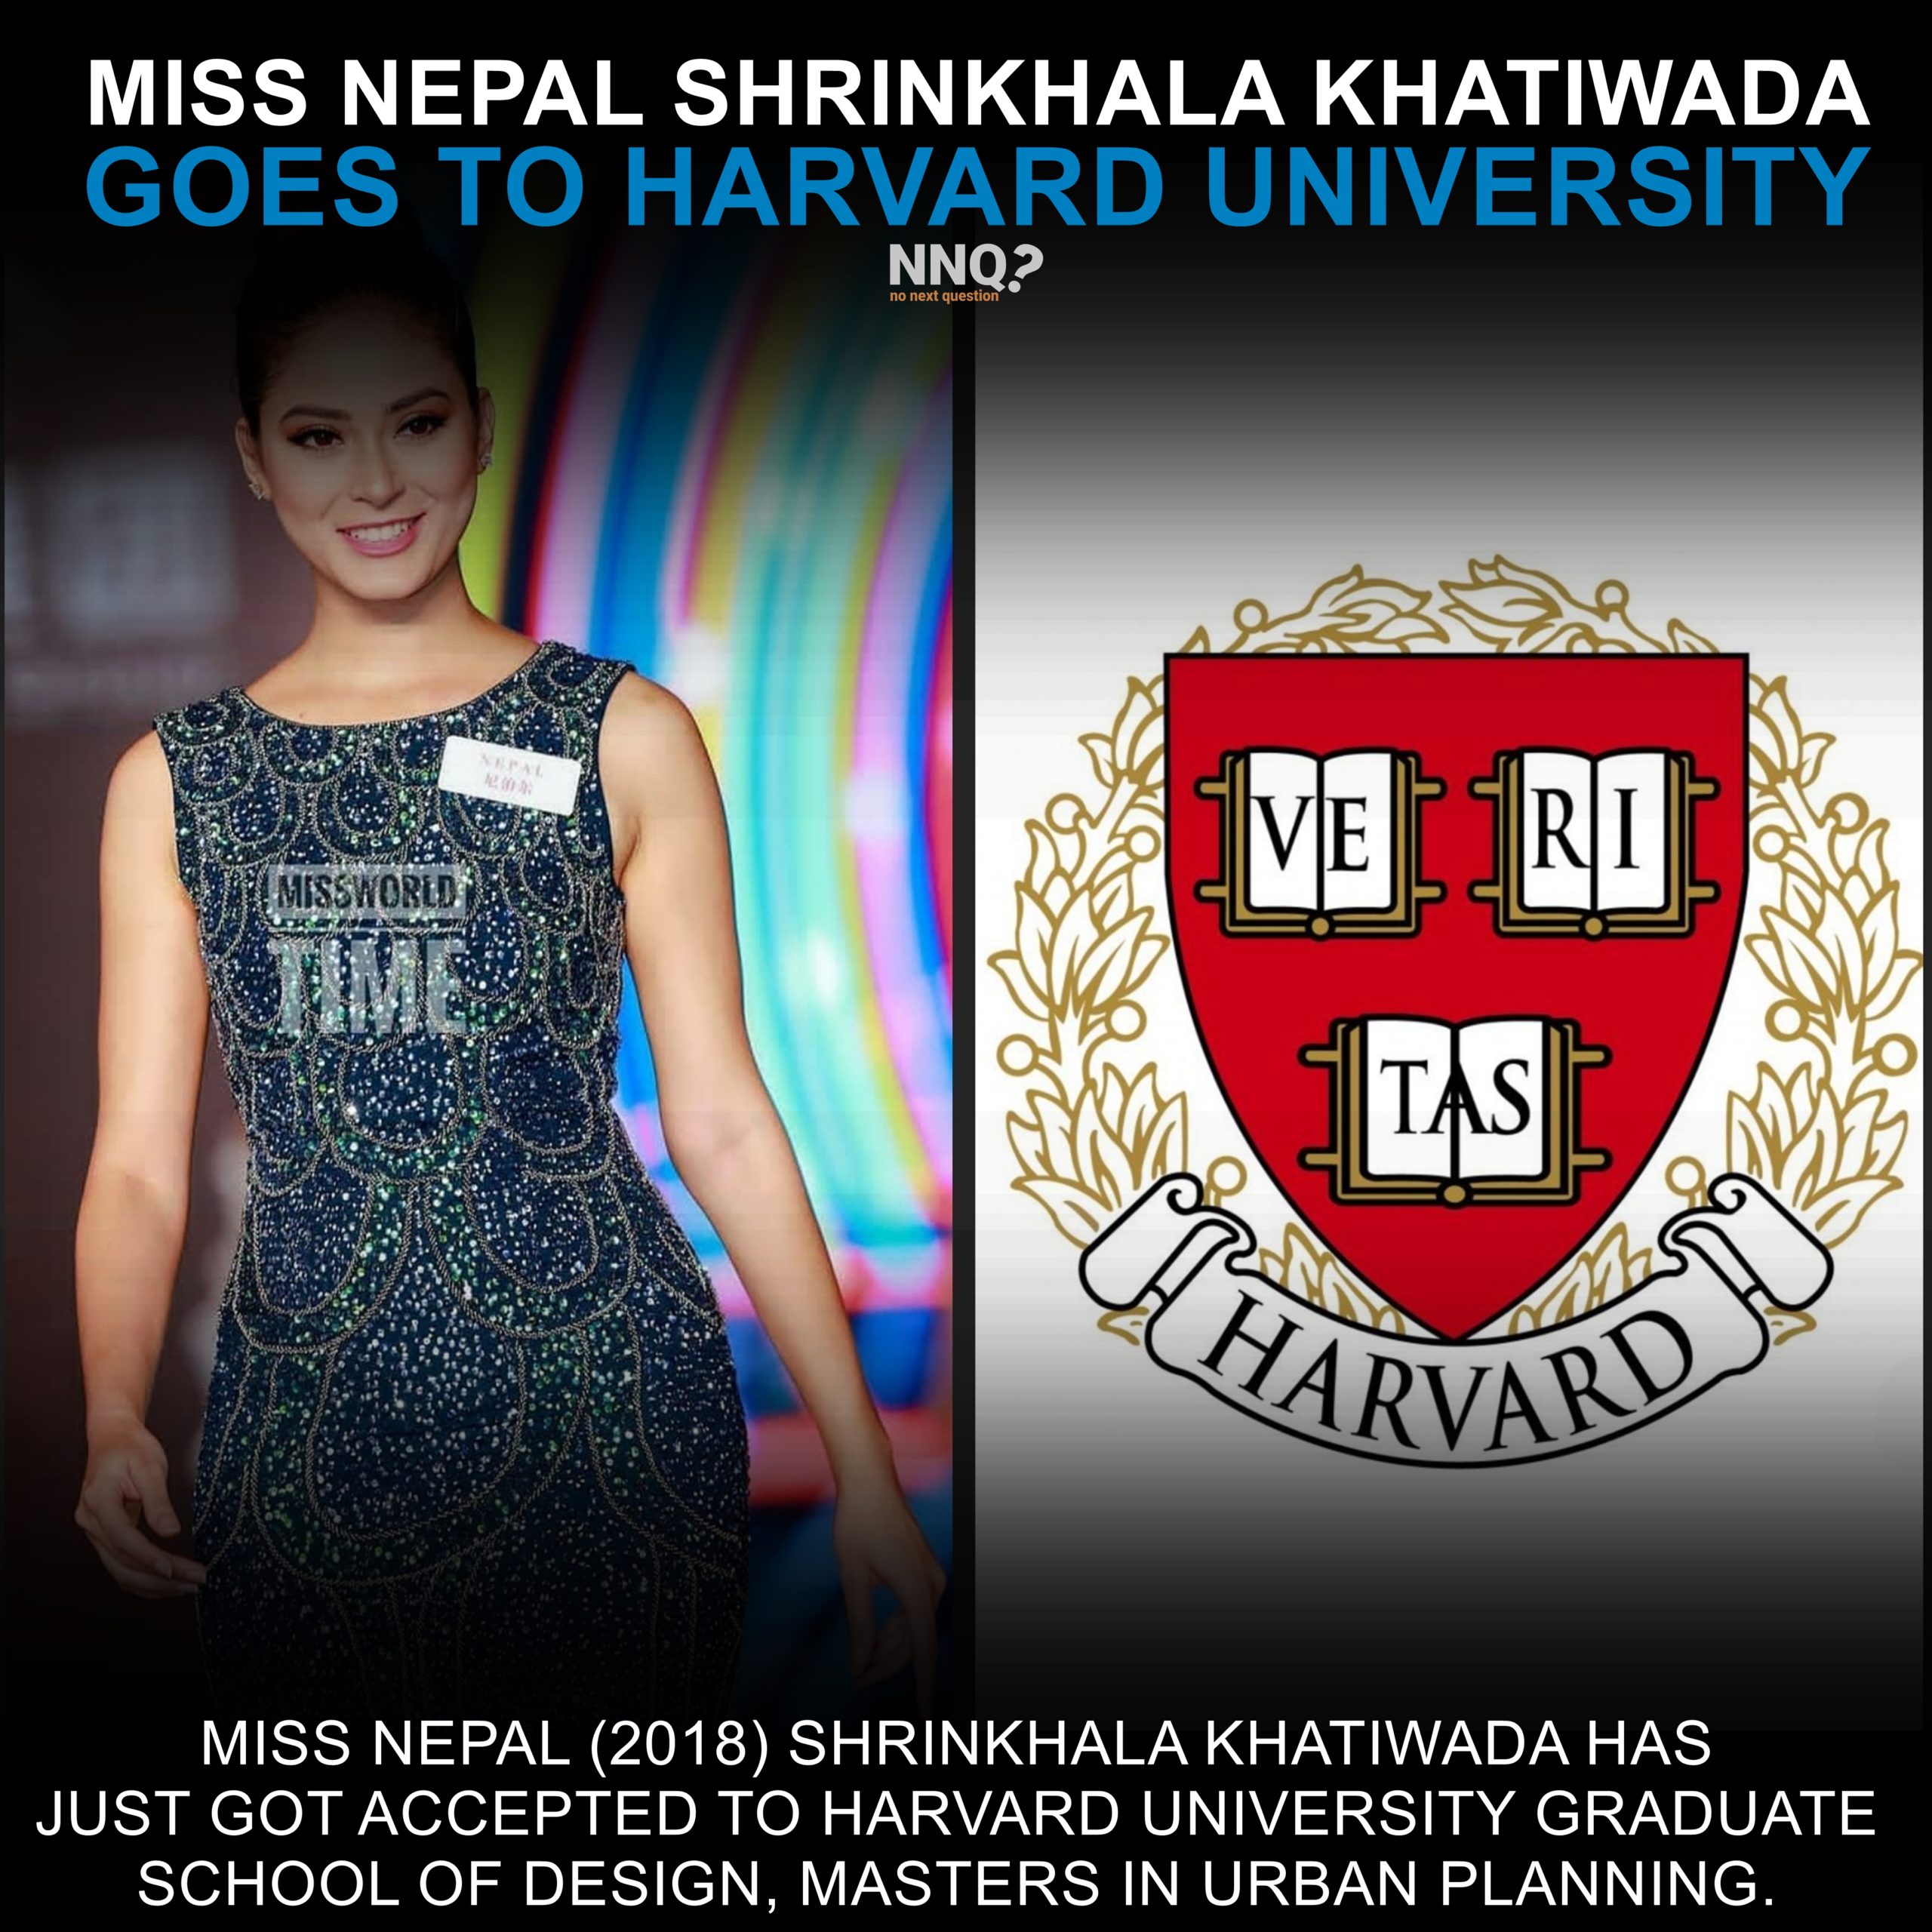 Shrinkhala Khatiwada Goes to Harvard